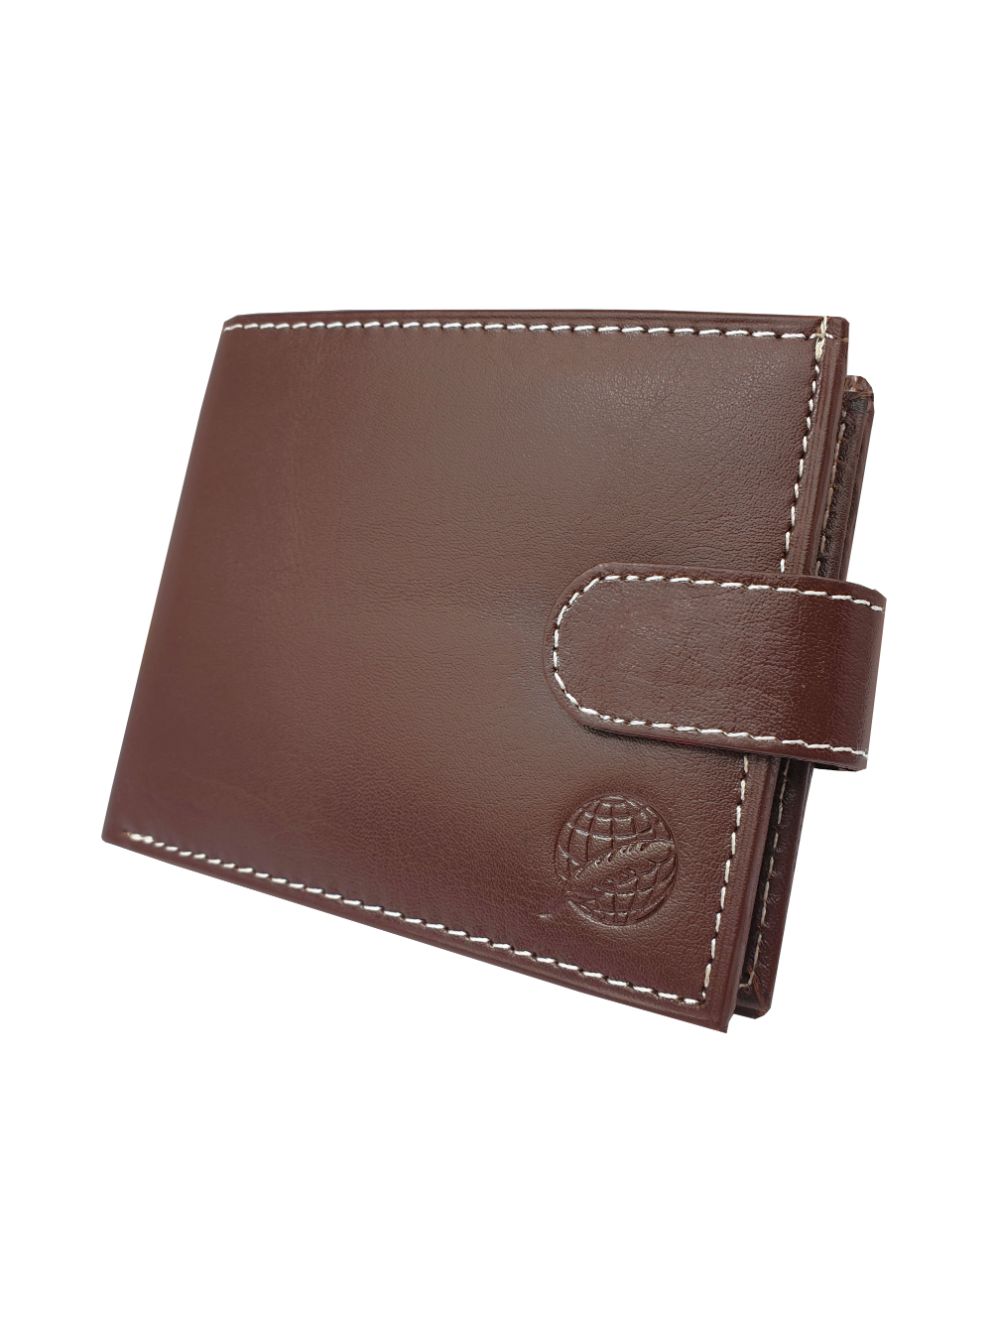 Roamlite Mens Wallet Light Brown Leather RL507 front